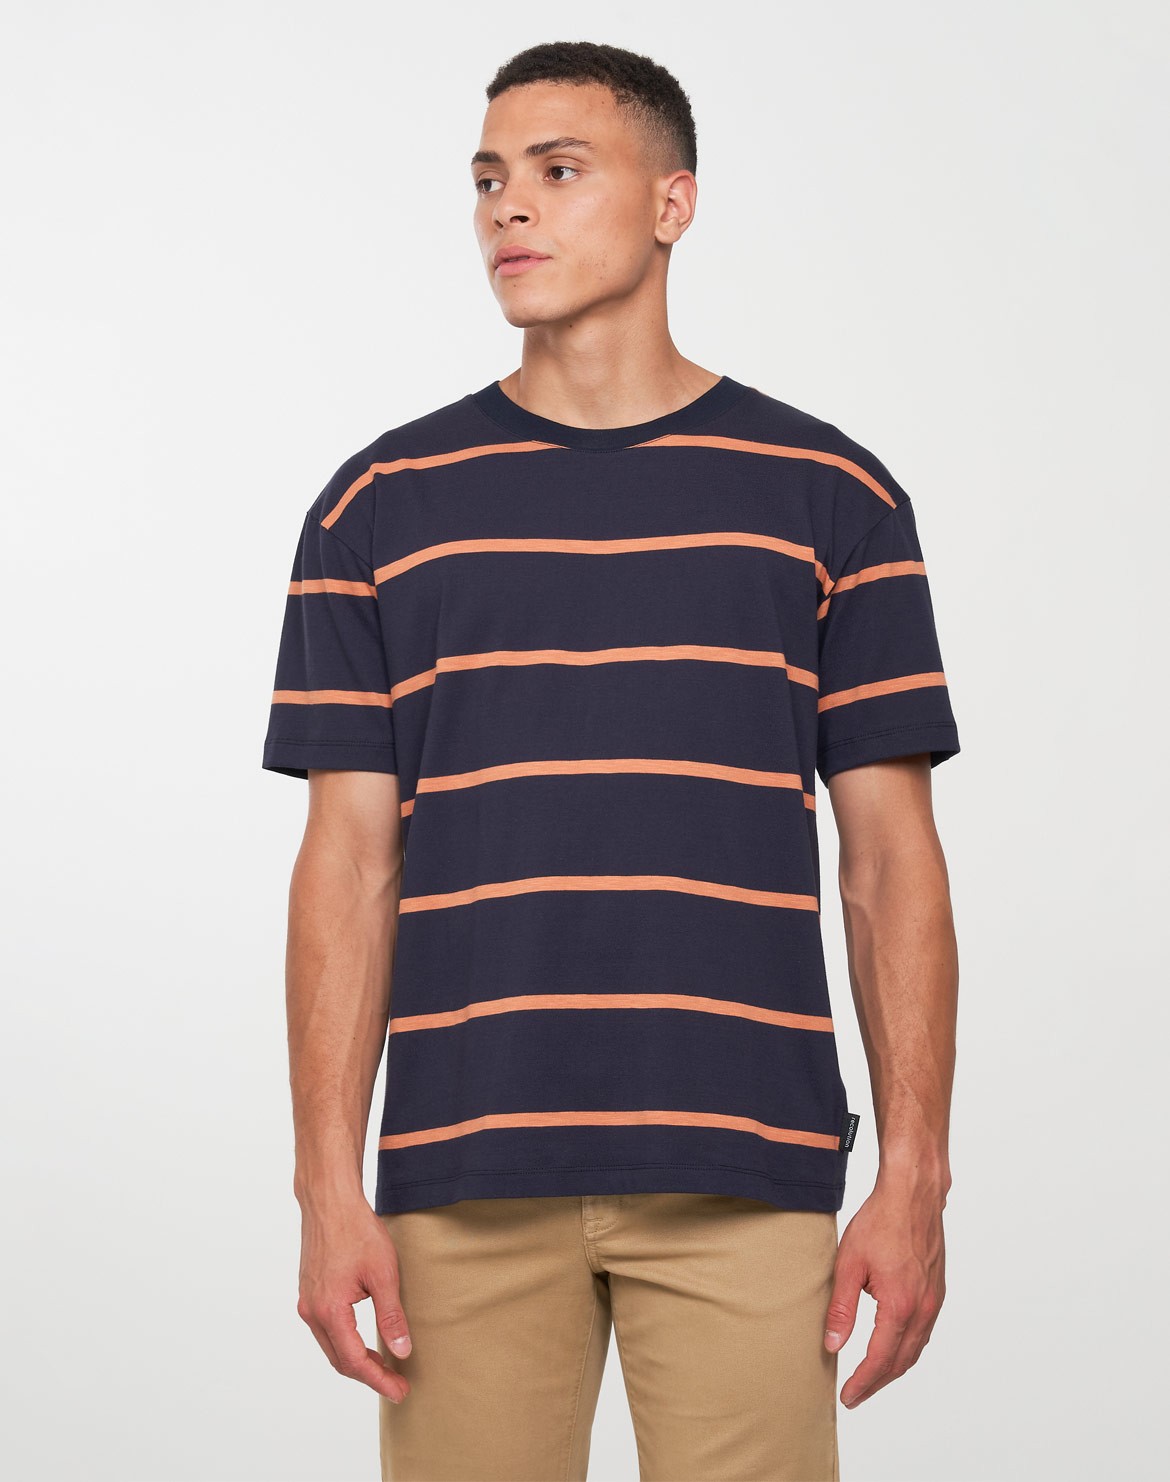 Rowan Stripes T-Shirt